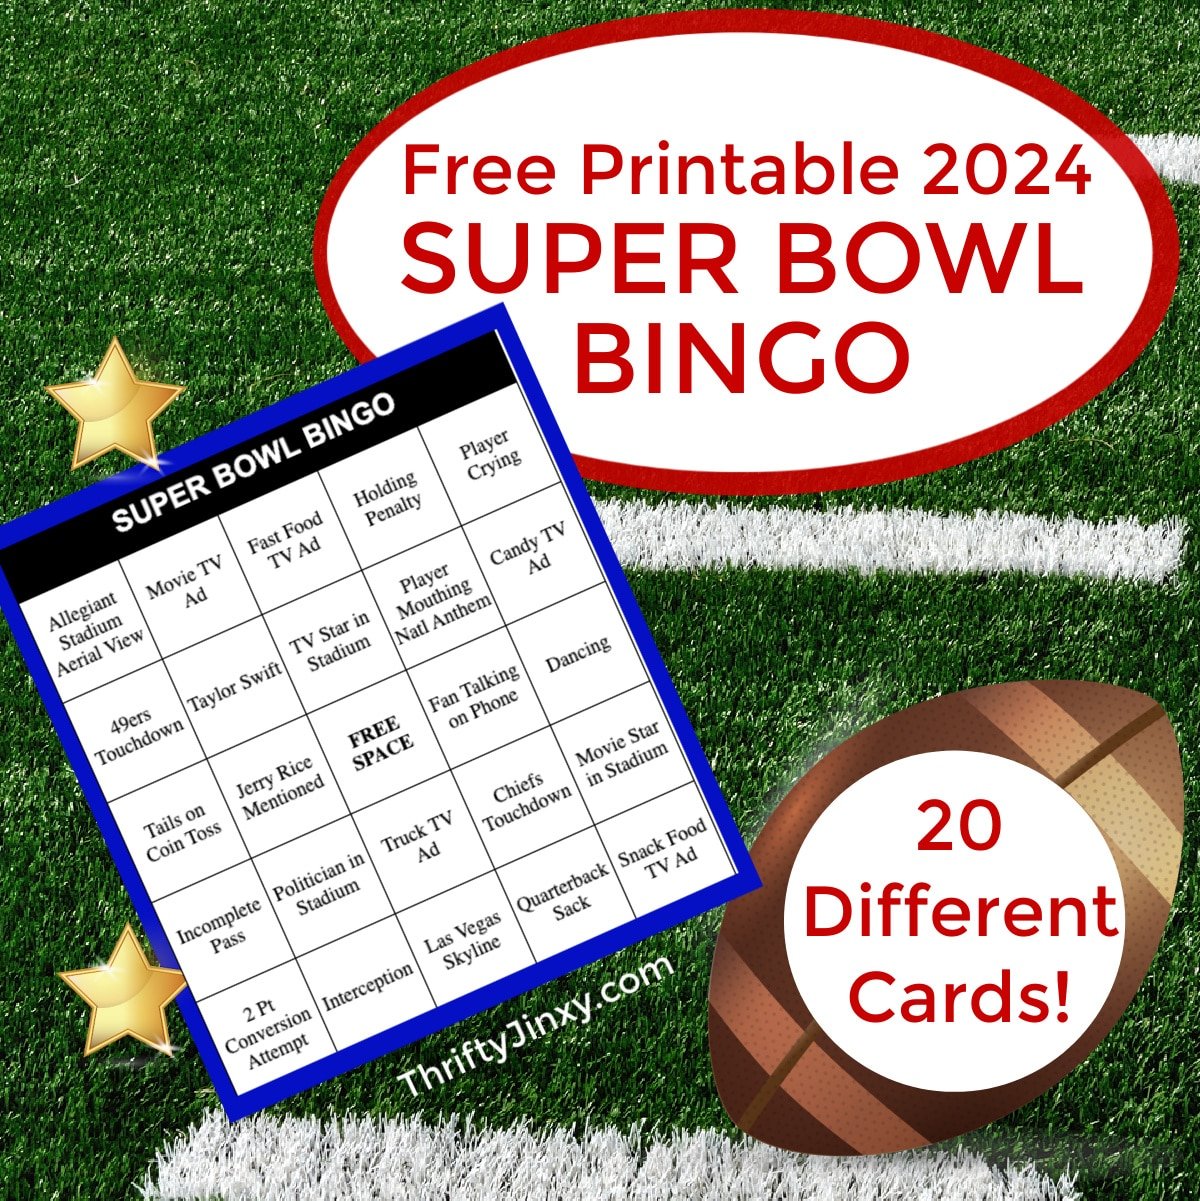 Free Printable 2024 Super Bowl Bingo Cards.